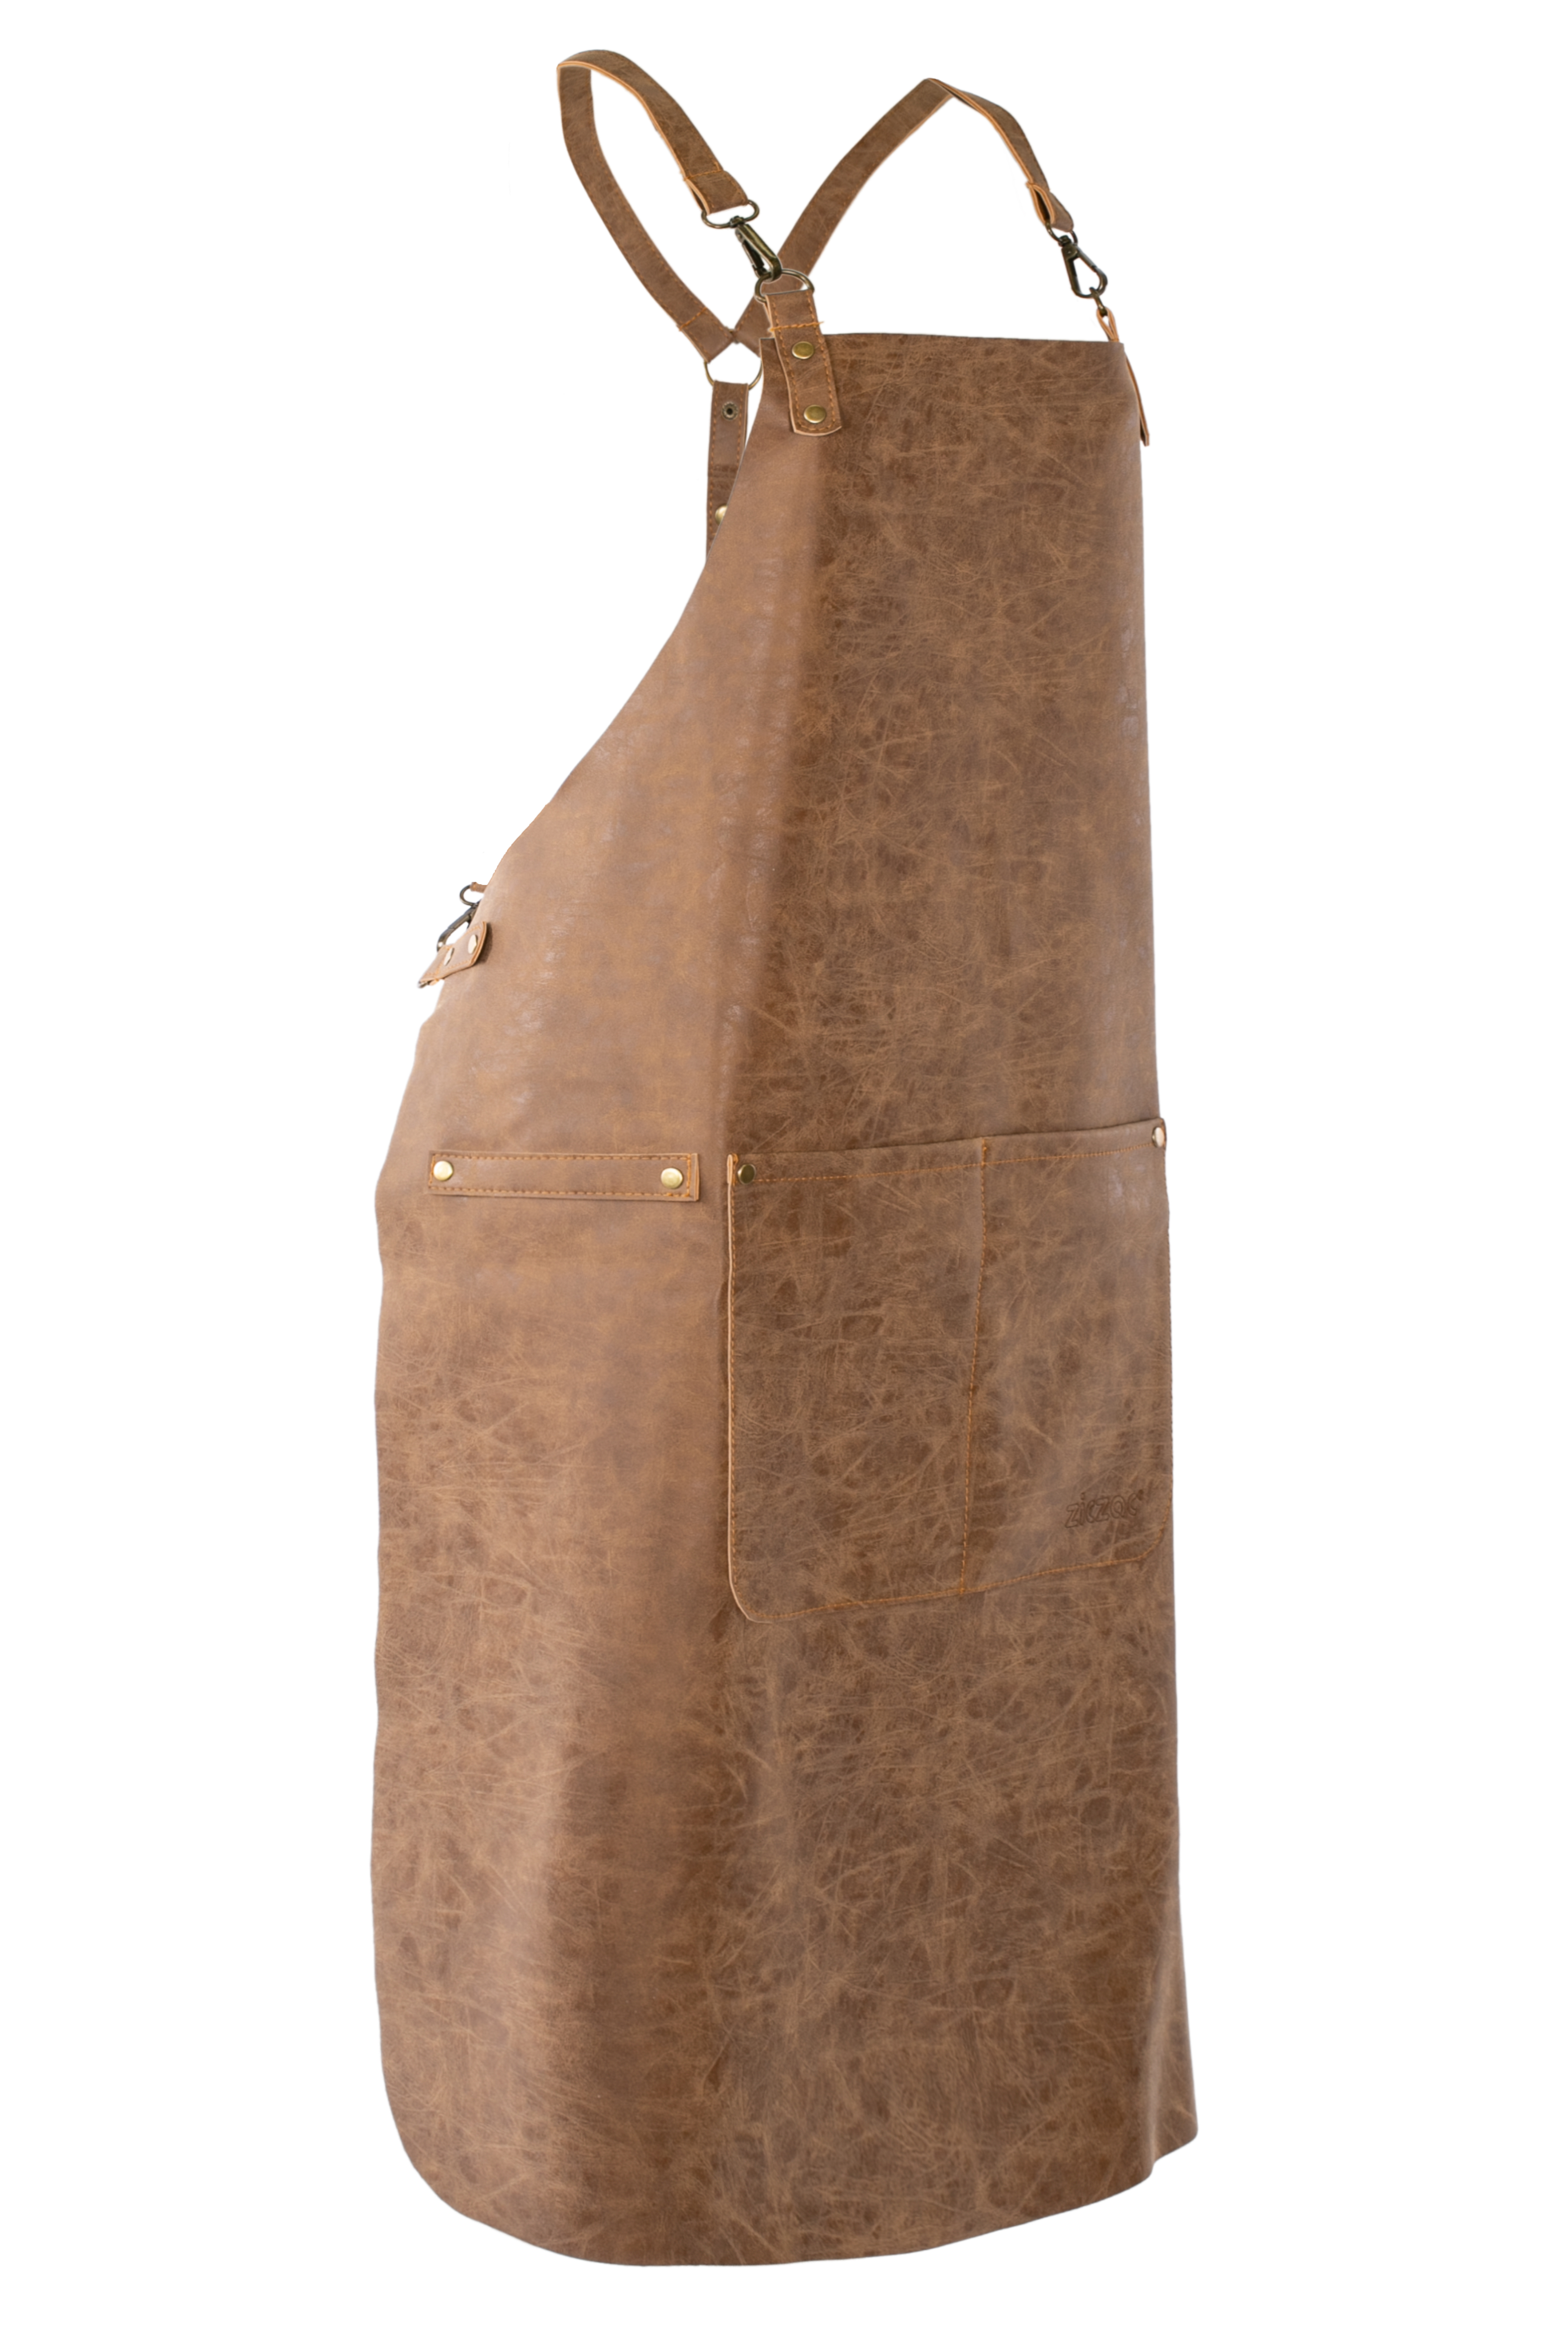 Apron TRUMAN (Sling Back Barber Style), 64x85 cm, walnut